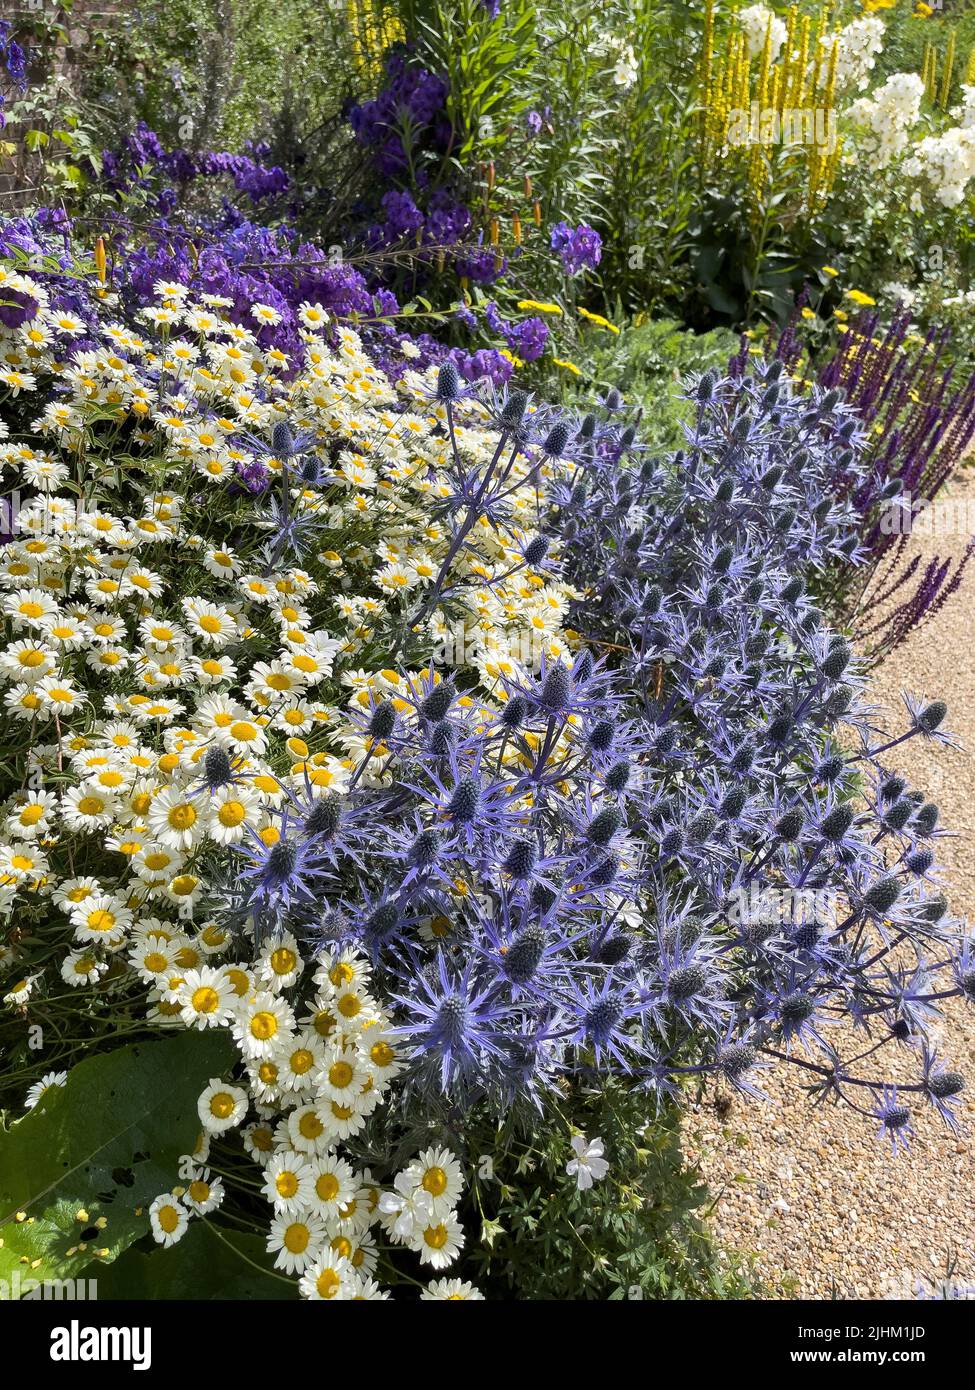 White Ox-eye daisies growing alongside blue Sea Holly in a UK garden. Stock Photo